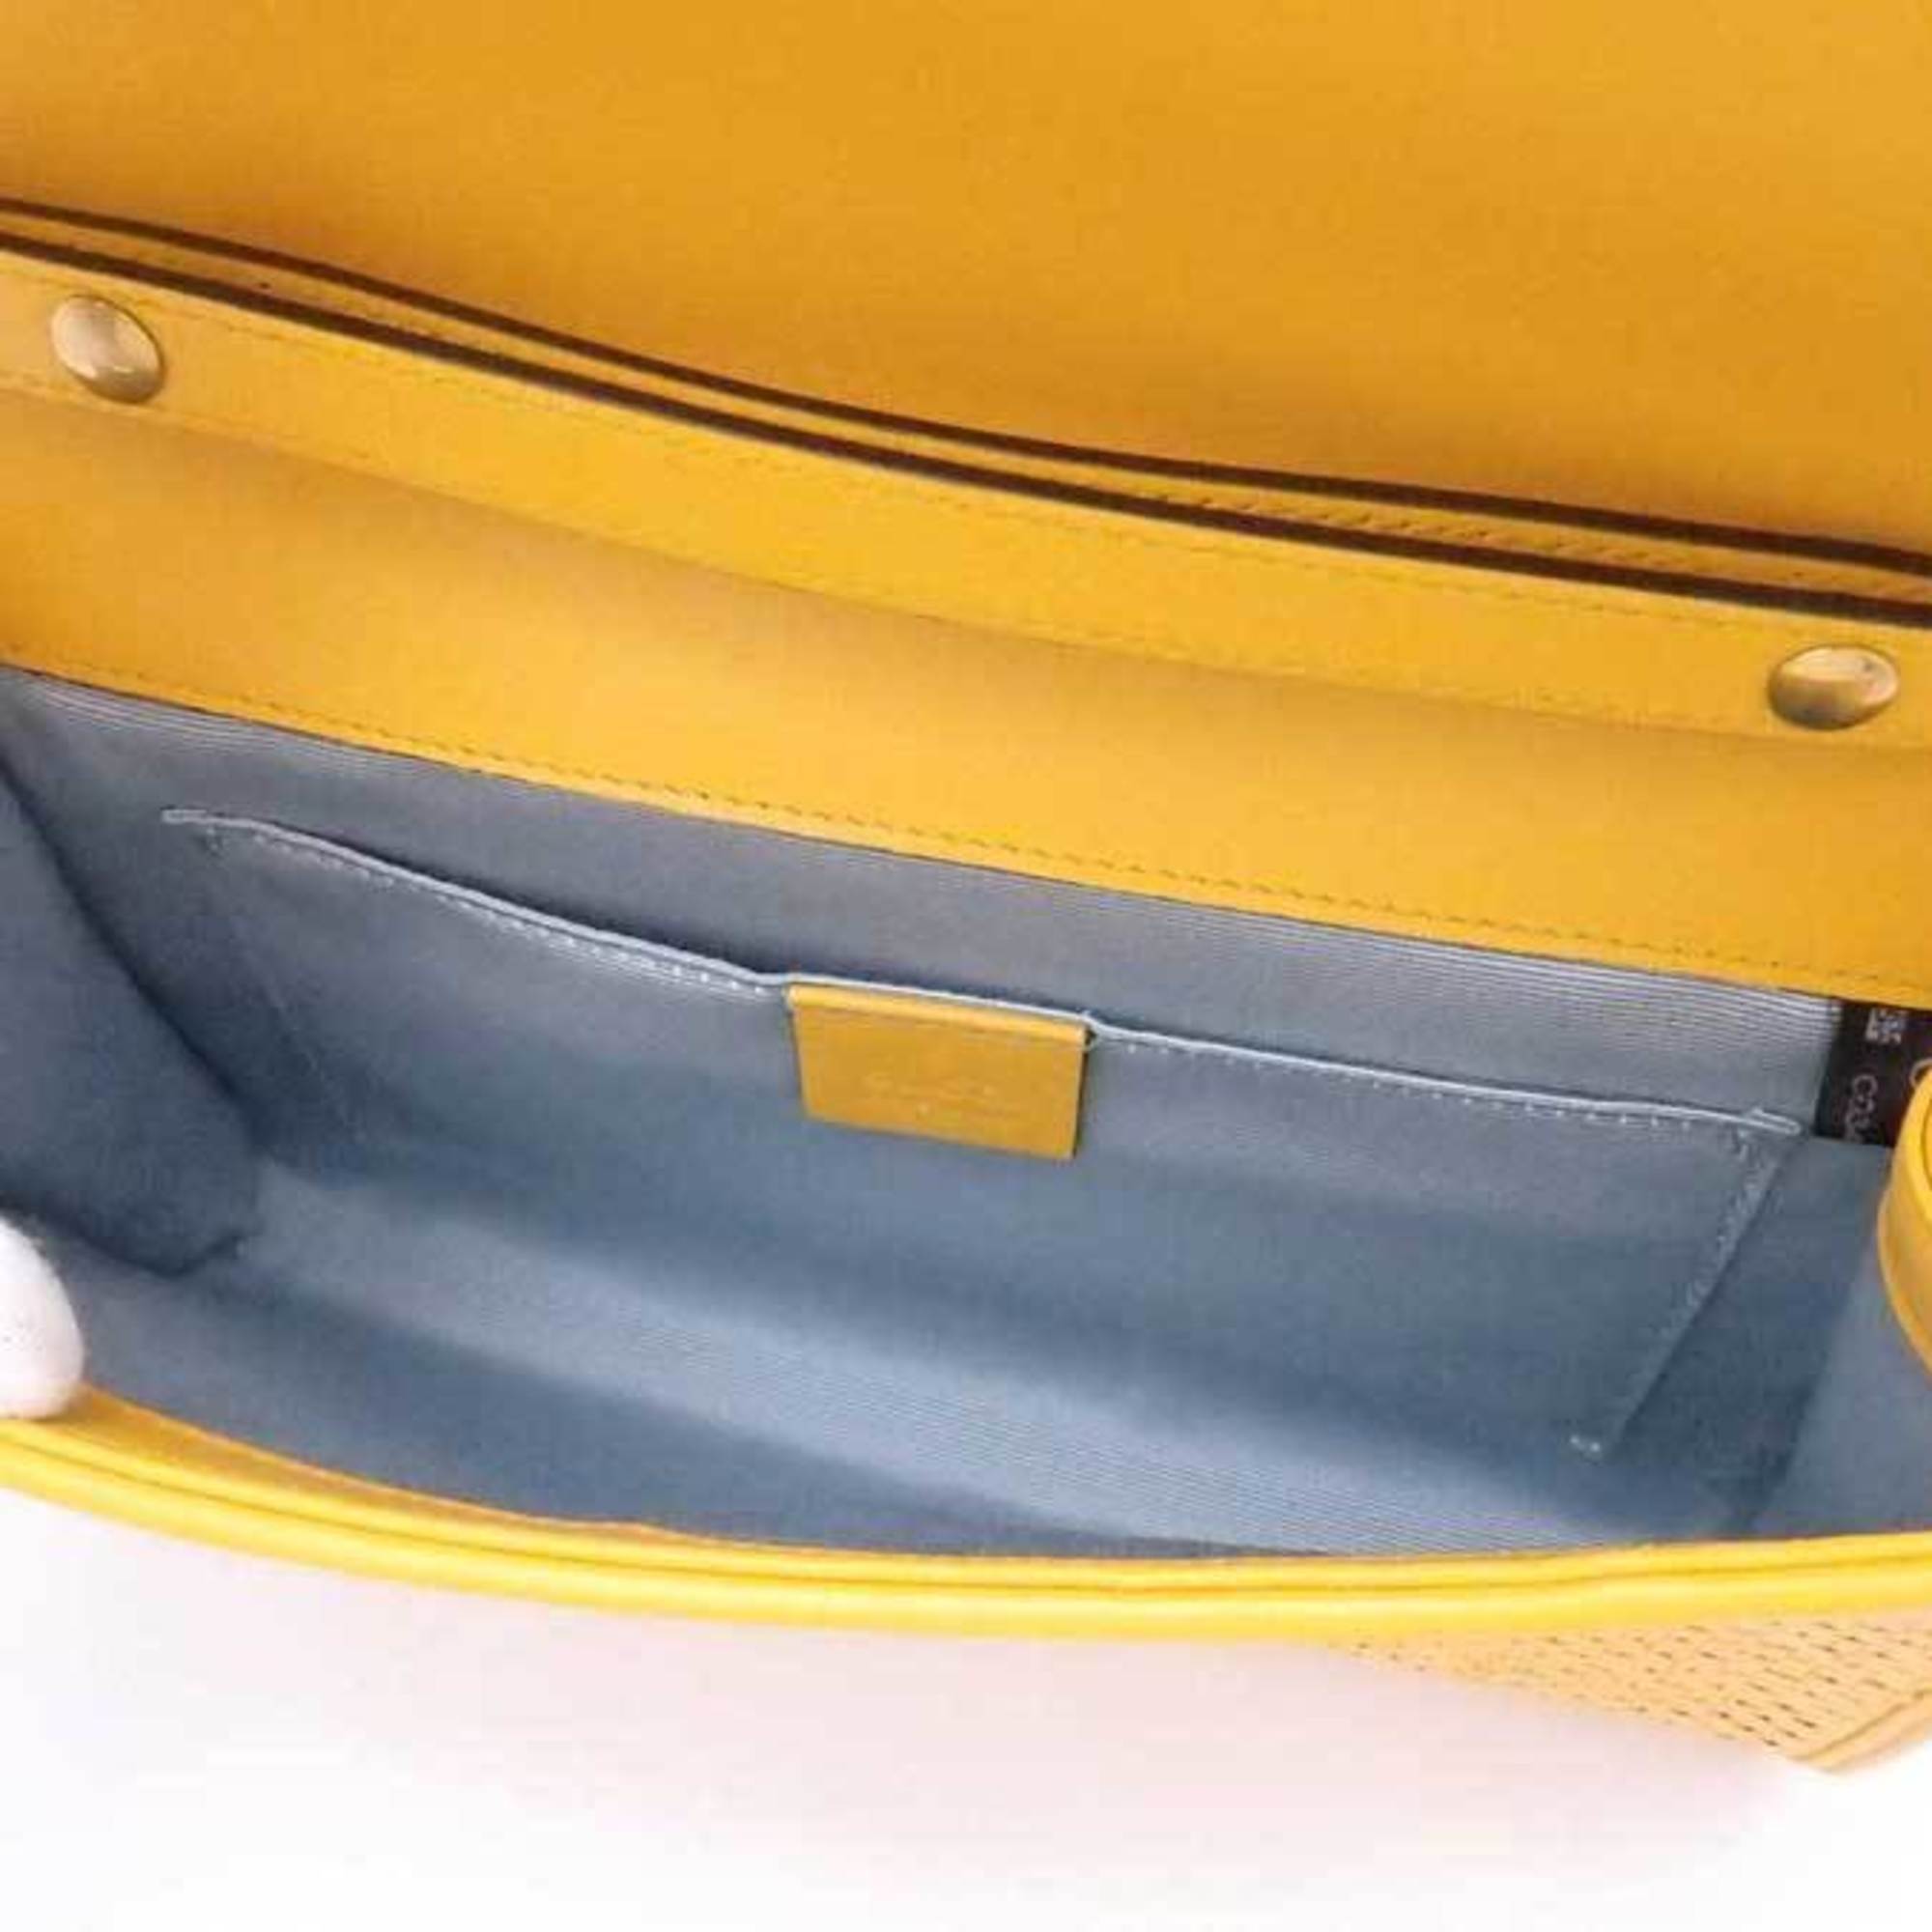 Gucci GUCCI Shoulder Bag Horsebit Straw/Leather Yellow x Black Gold Women's 655667